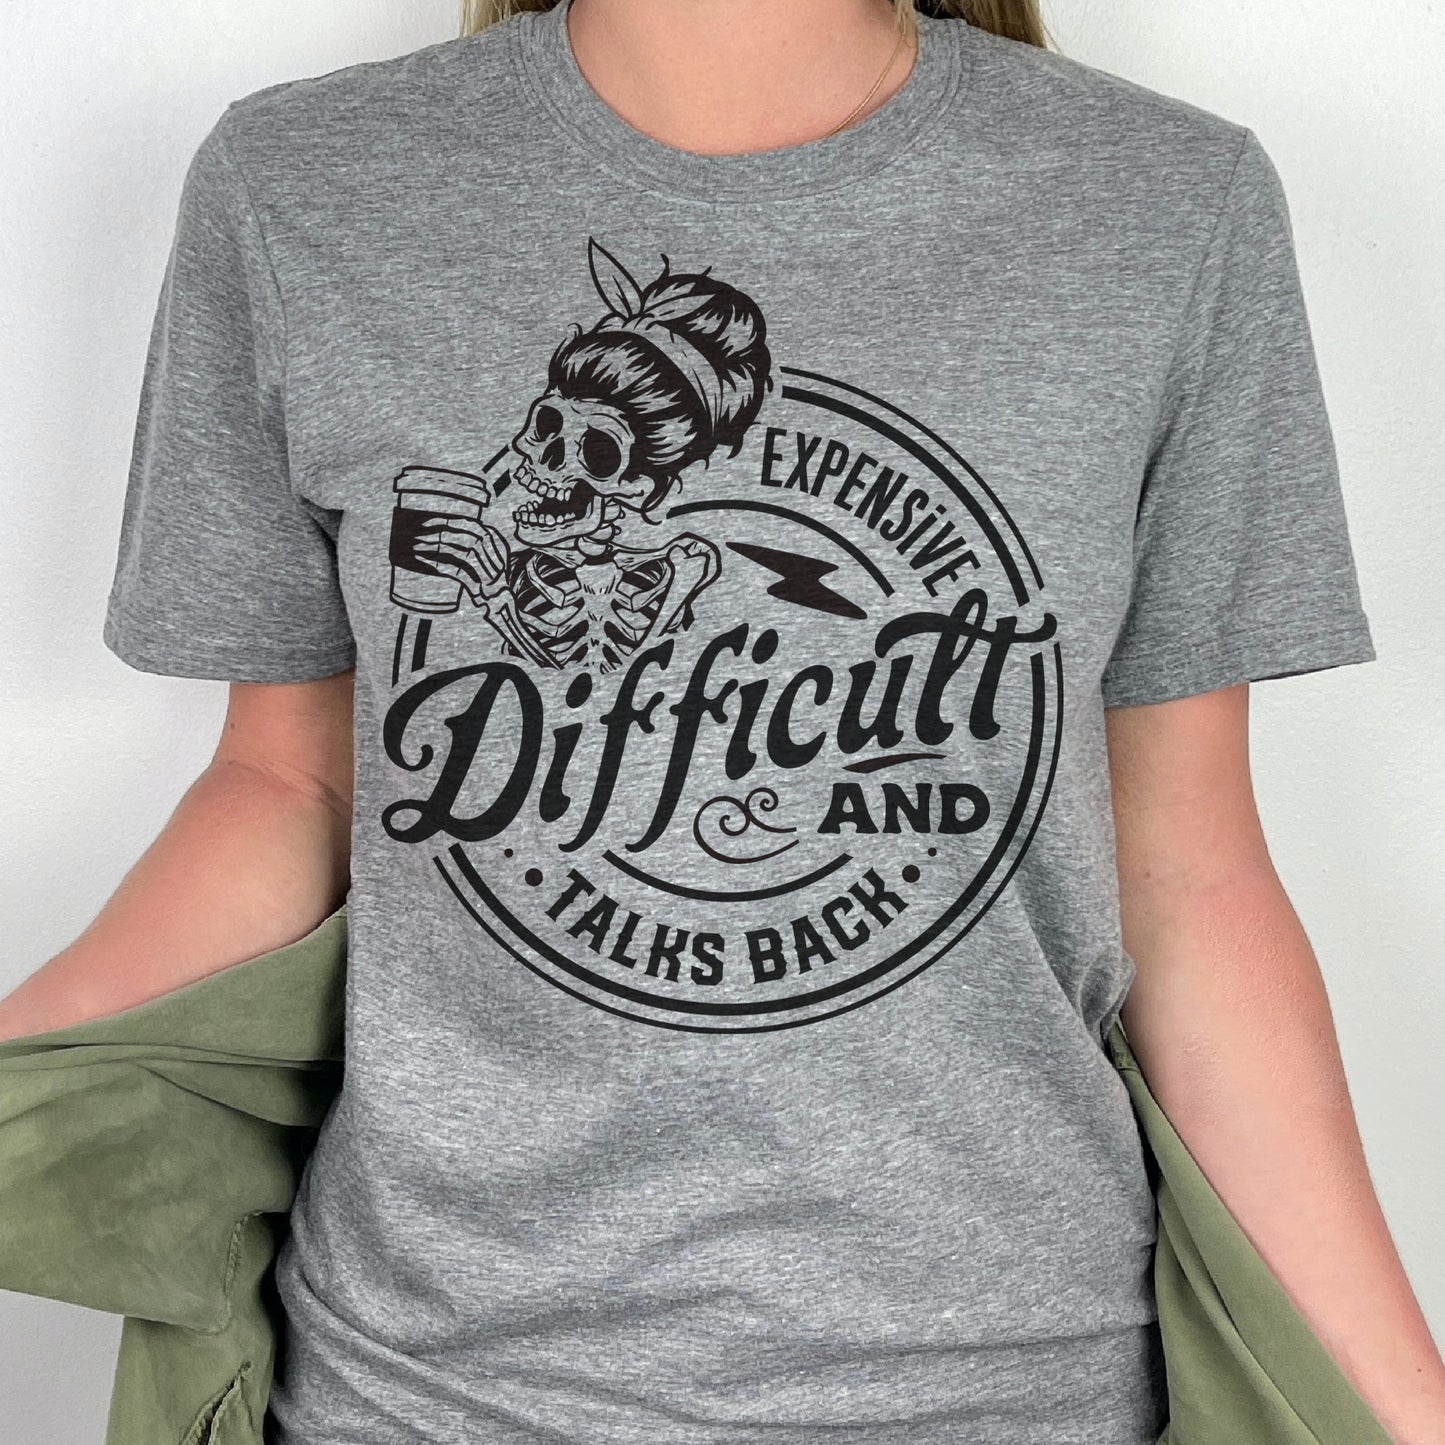 Expensive and Difficult T-Shirt Talks Back Tshirt Funny Sarcastic Tee Soft Print Shirt Sarcasm Fun T-Shirt Sublimation Print Tee